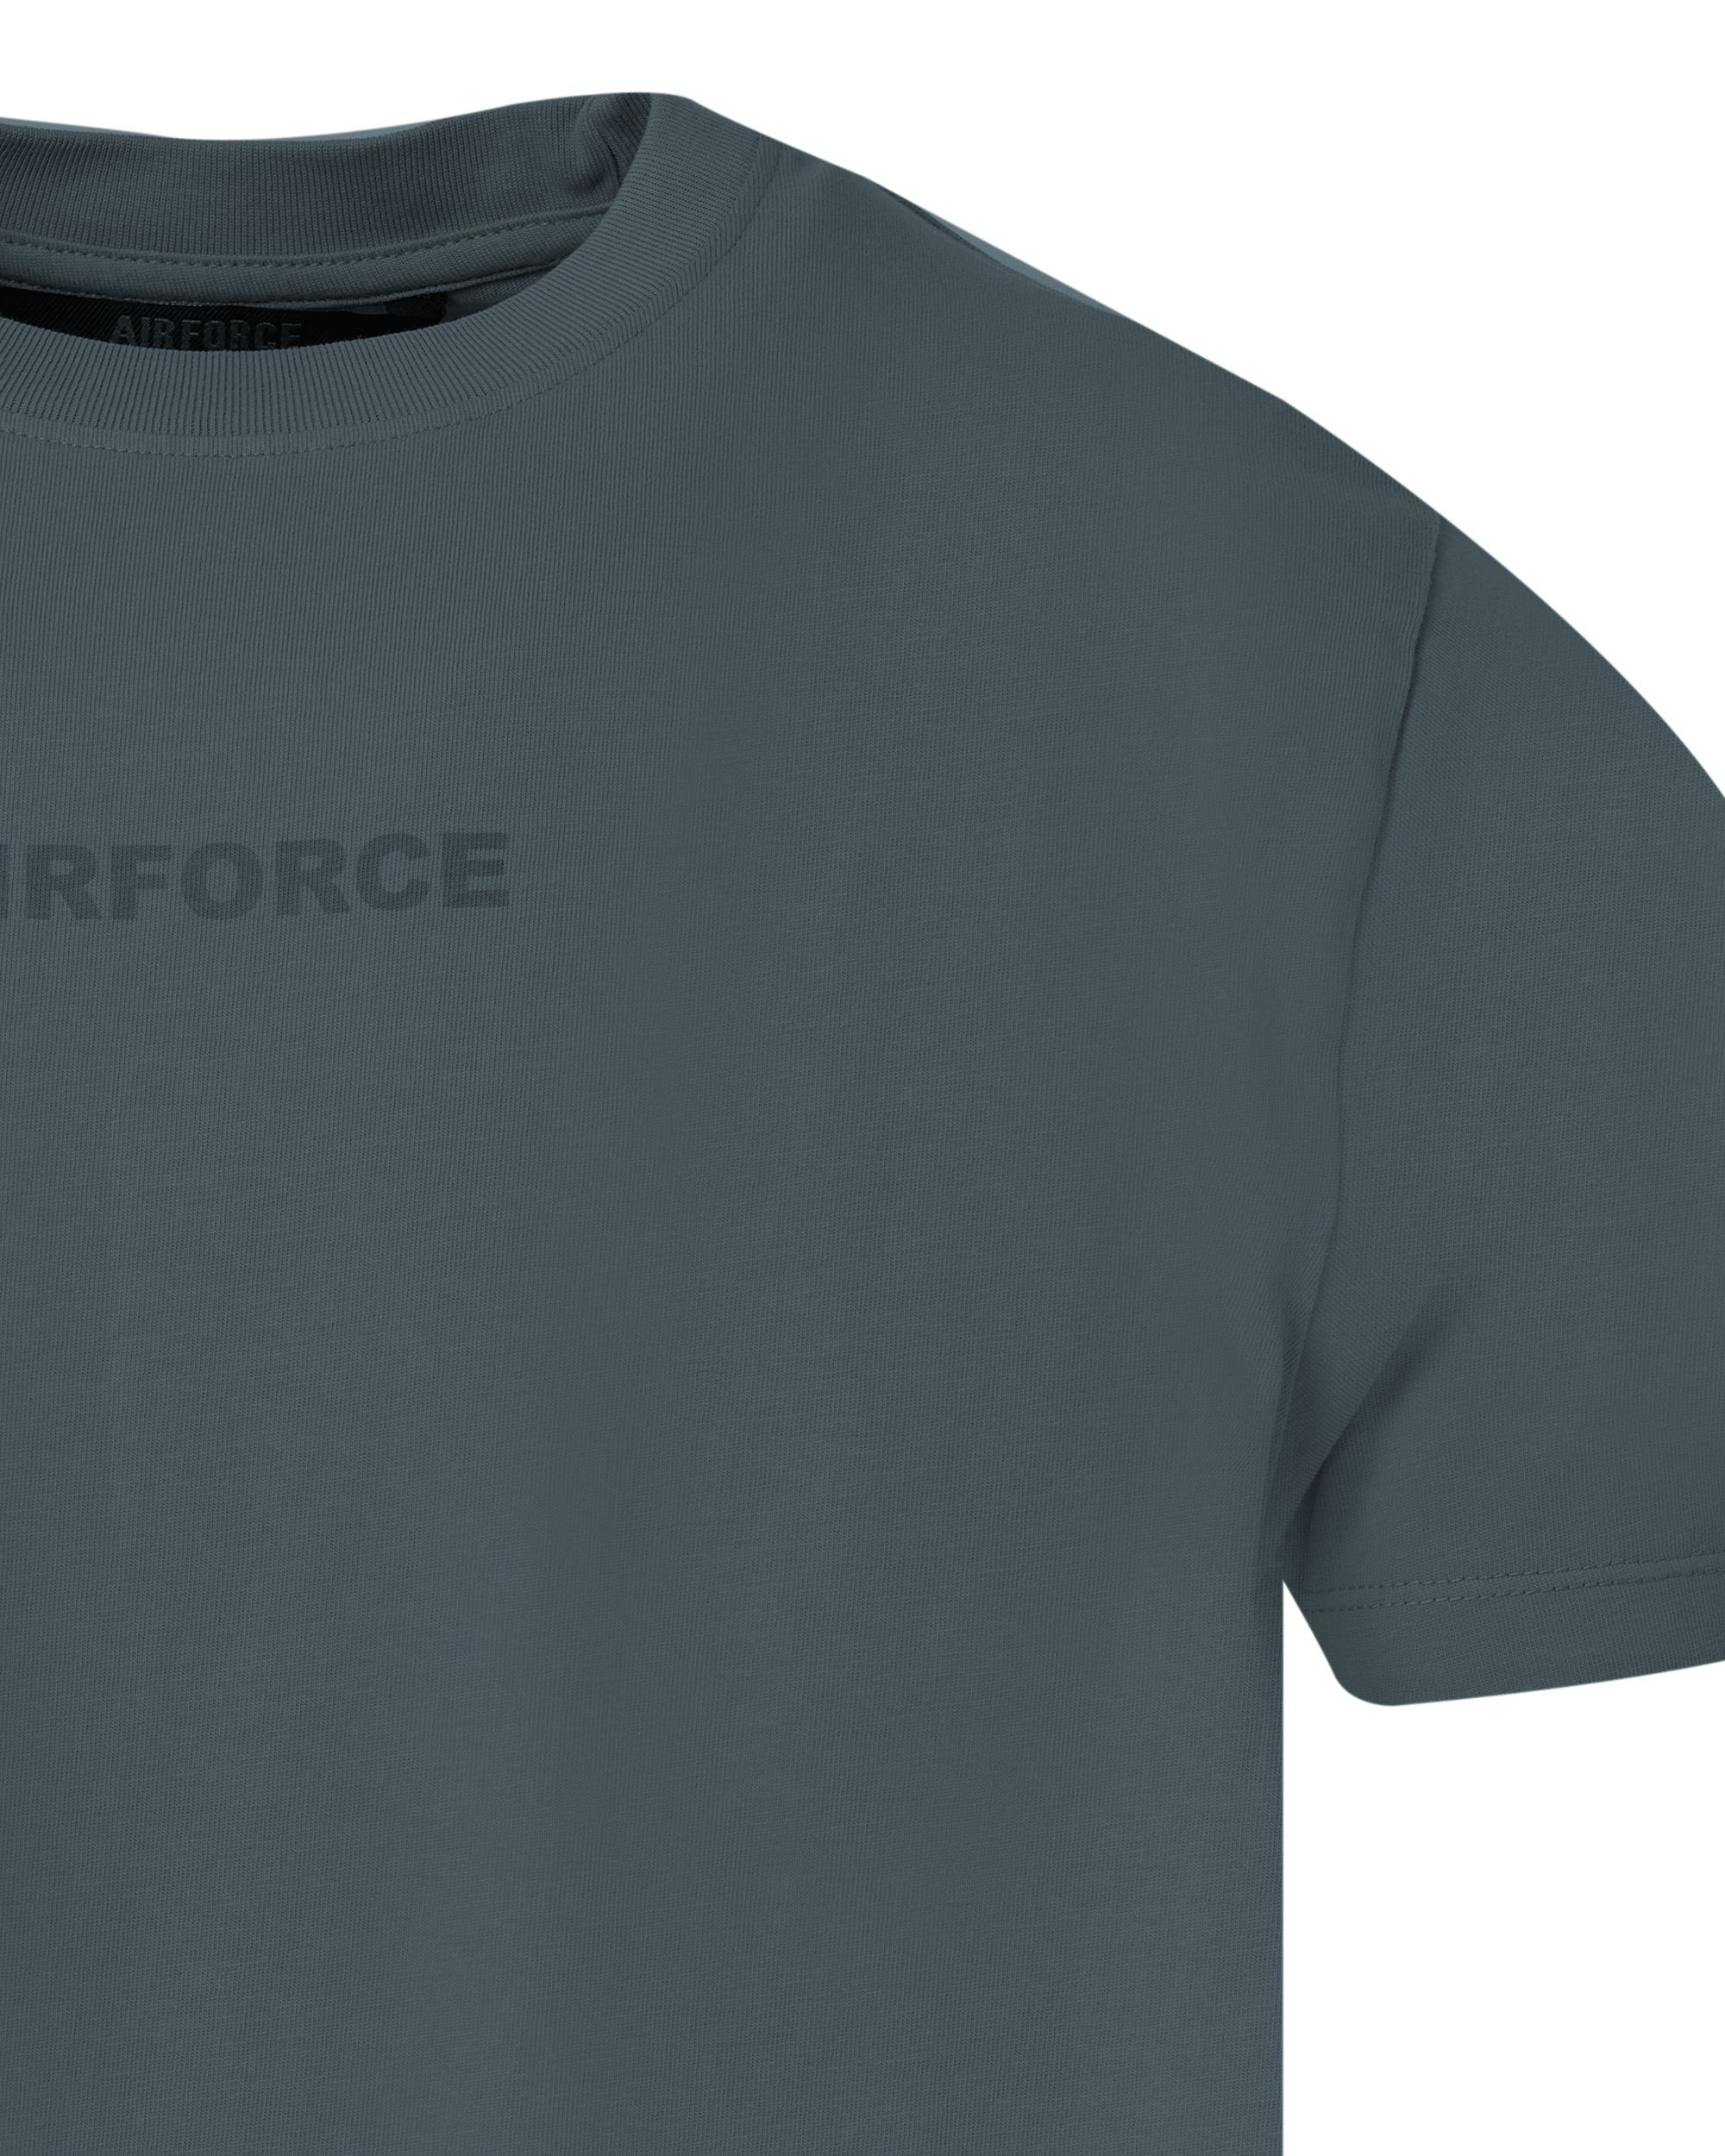 Airforce T-shirt KM Blauw 083295-001-L